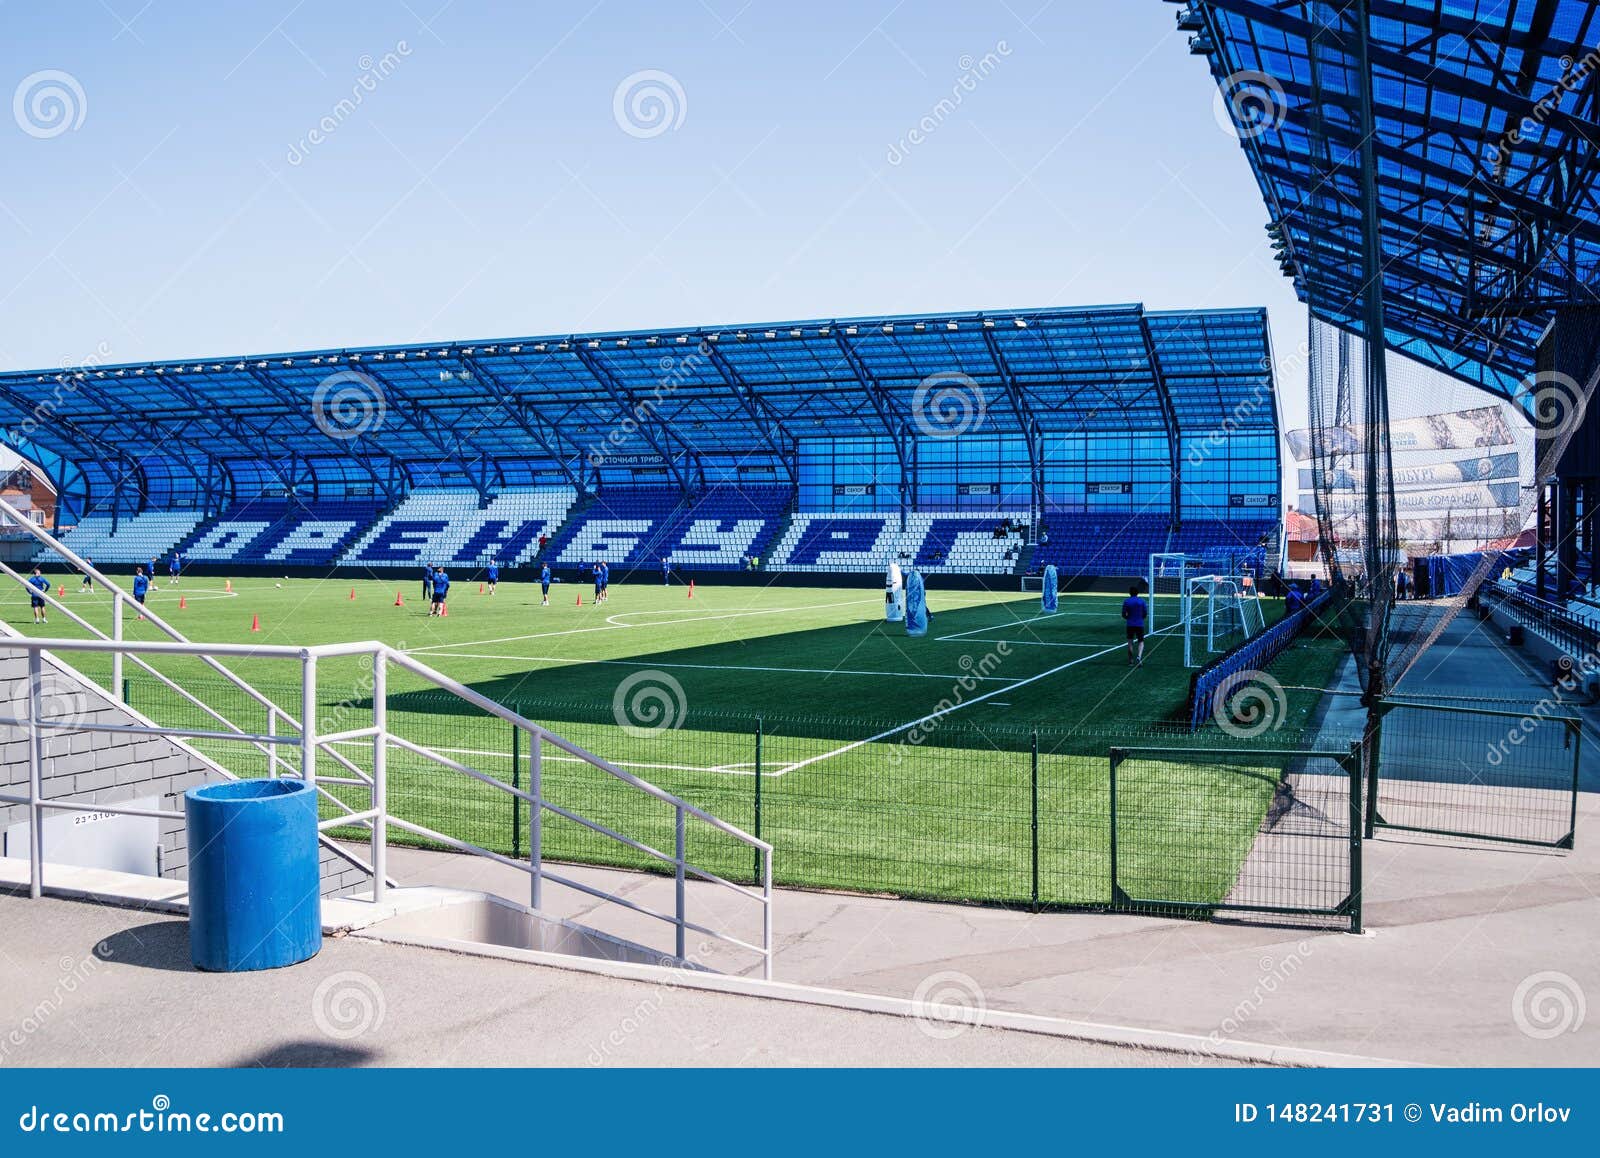 Gazovik Orenburg - Promoted to the Promised Land - Futbolgrad